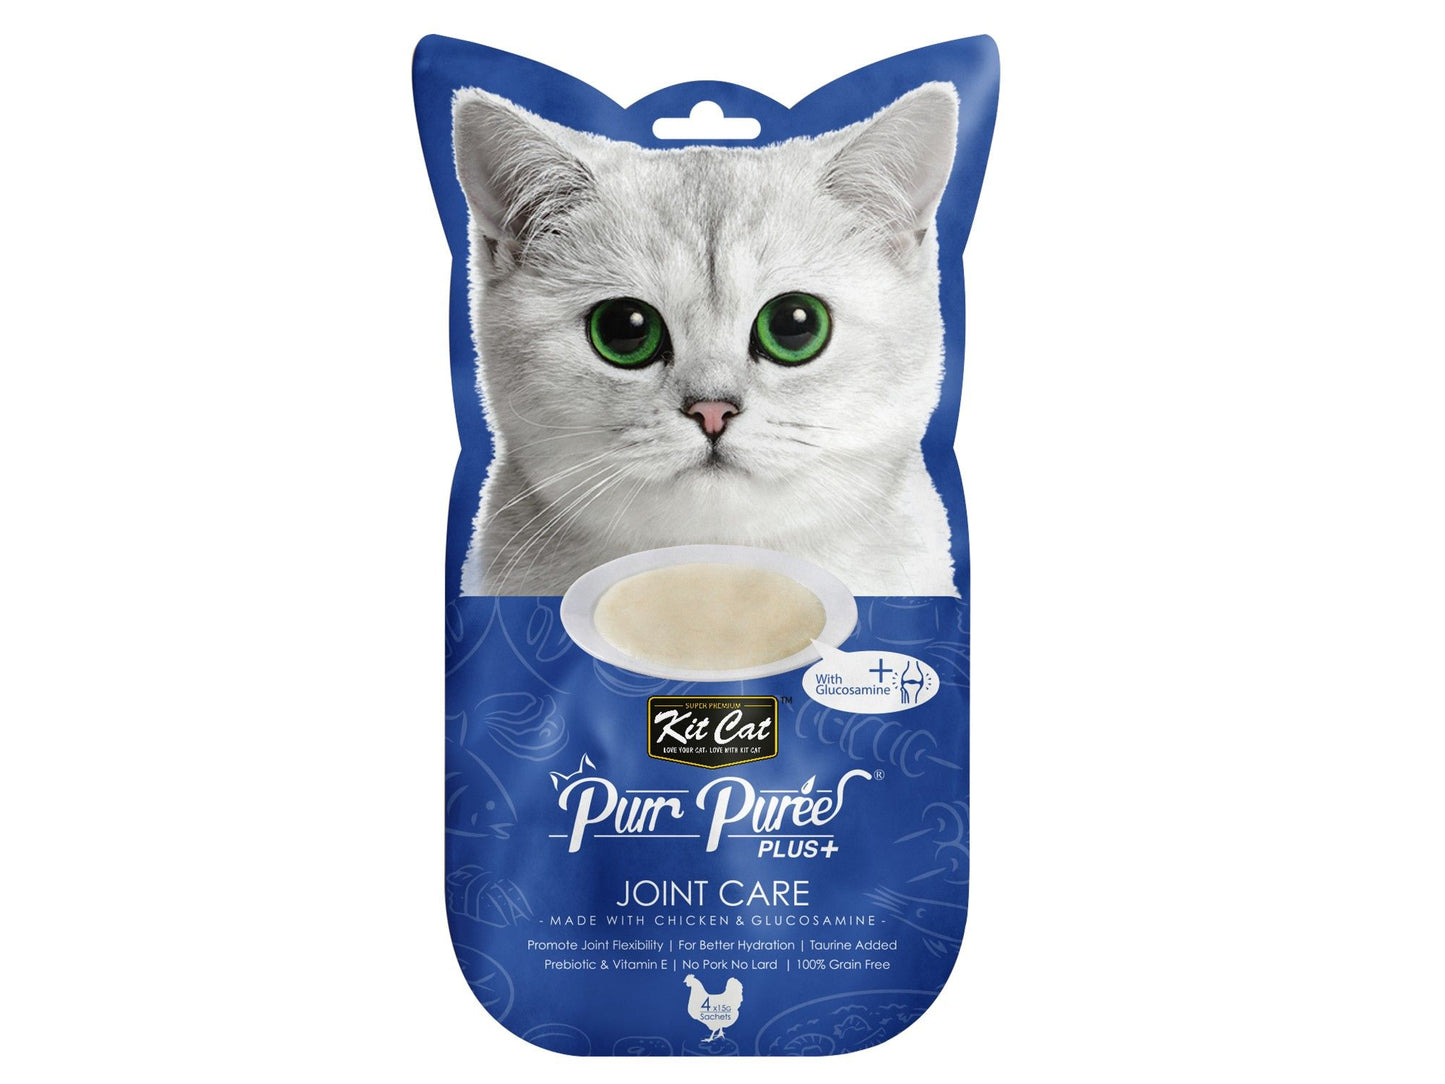 Kit Cat - Purr Puree Plus